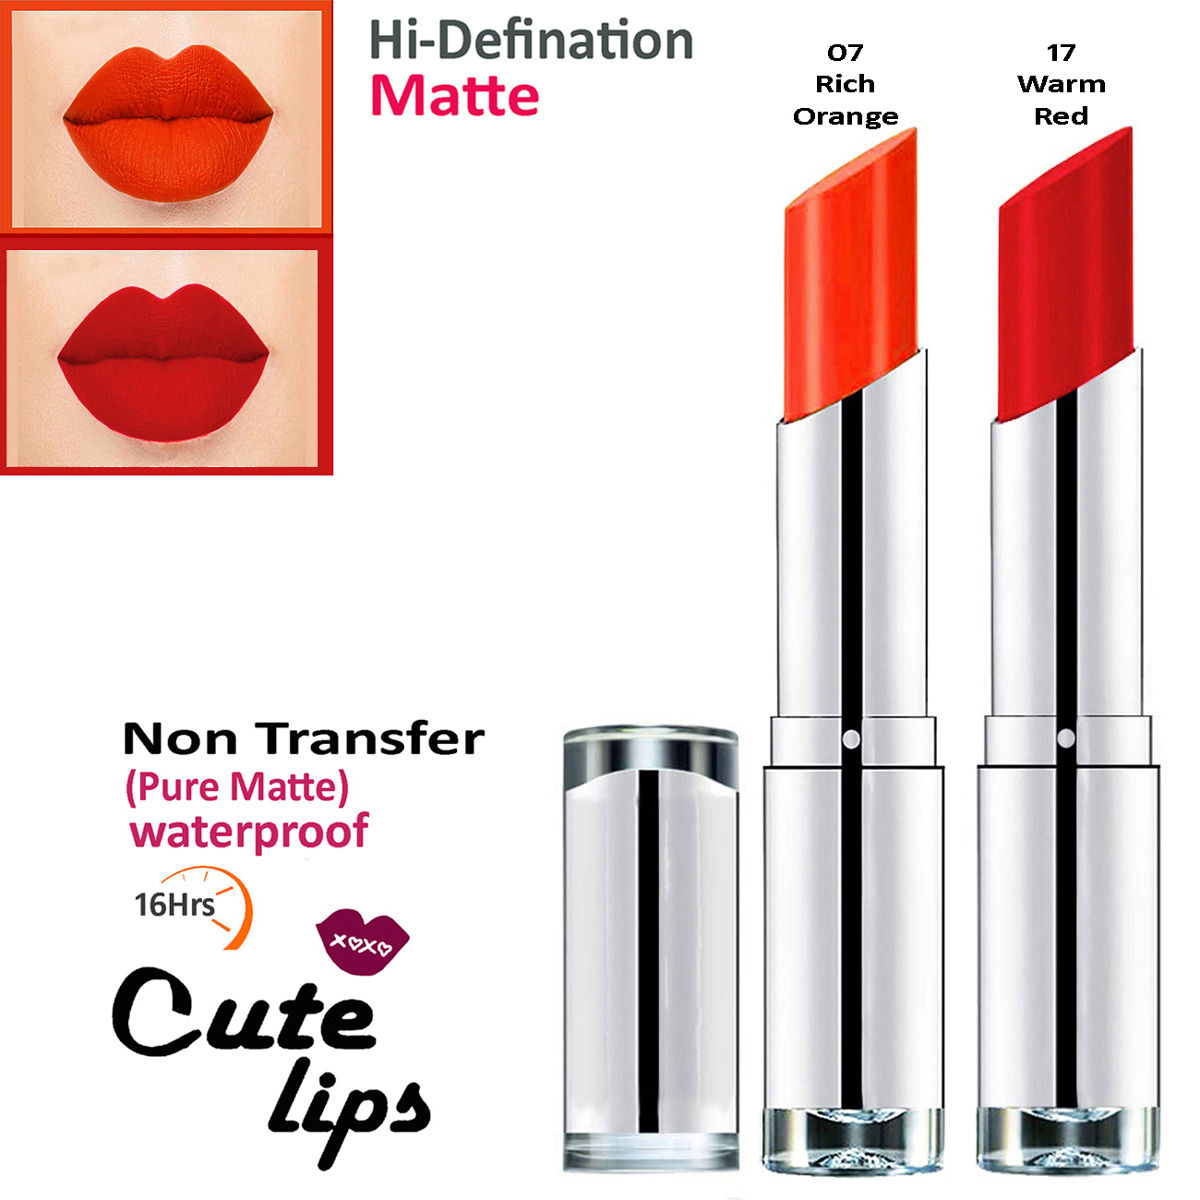 bq BLAQUE Cute Lips Non Transfer Matte Lipstick 2.4 gm each - 07 ...